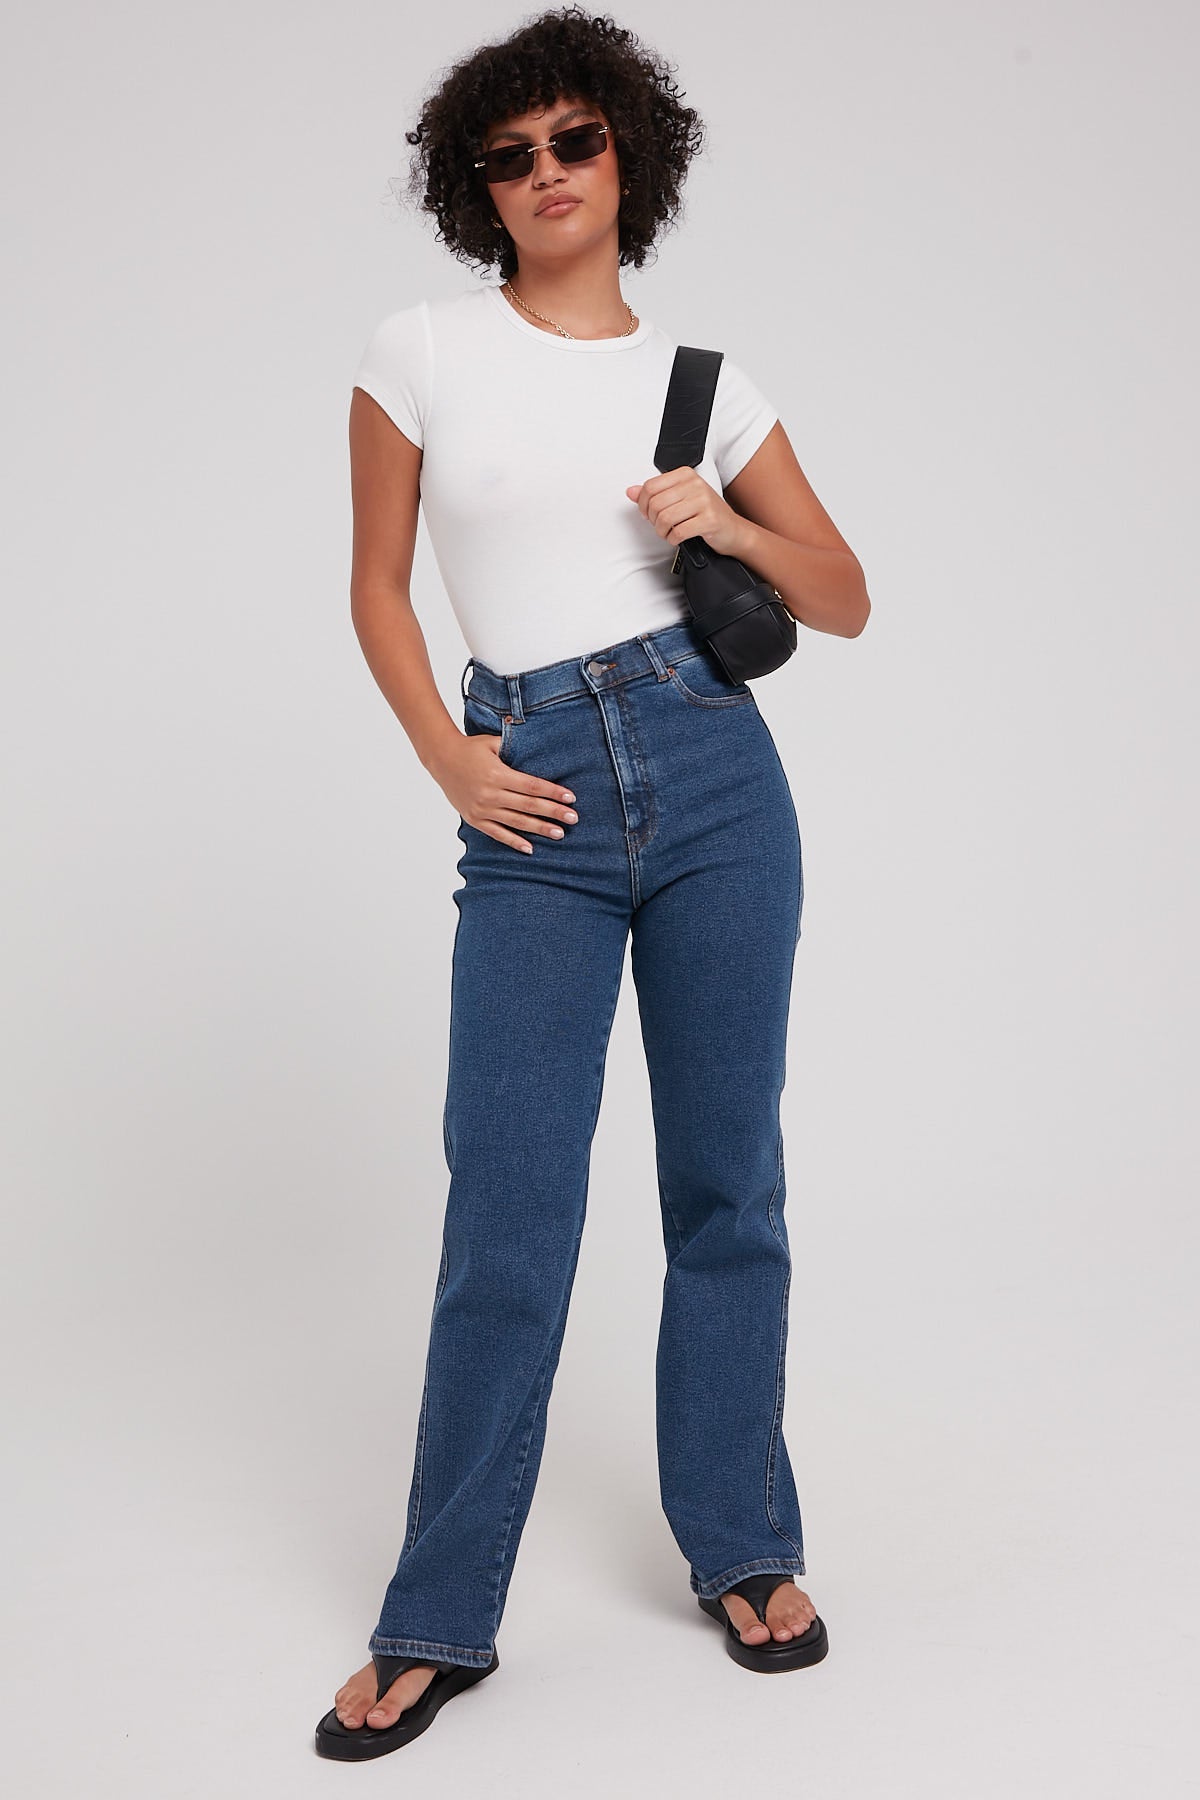 Hill Jeans White  Dr Denim Jeans Australia – Dr Denim Jeans